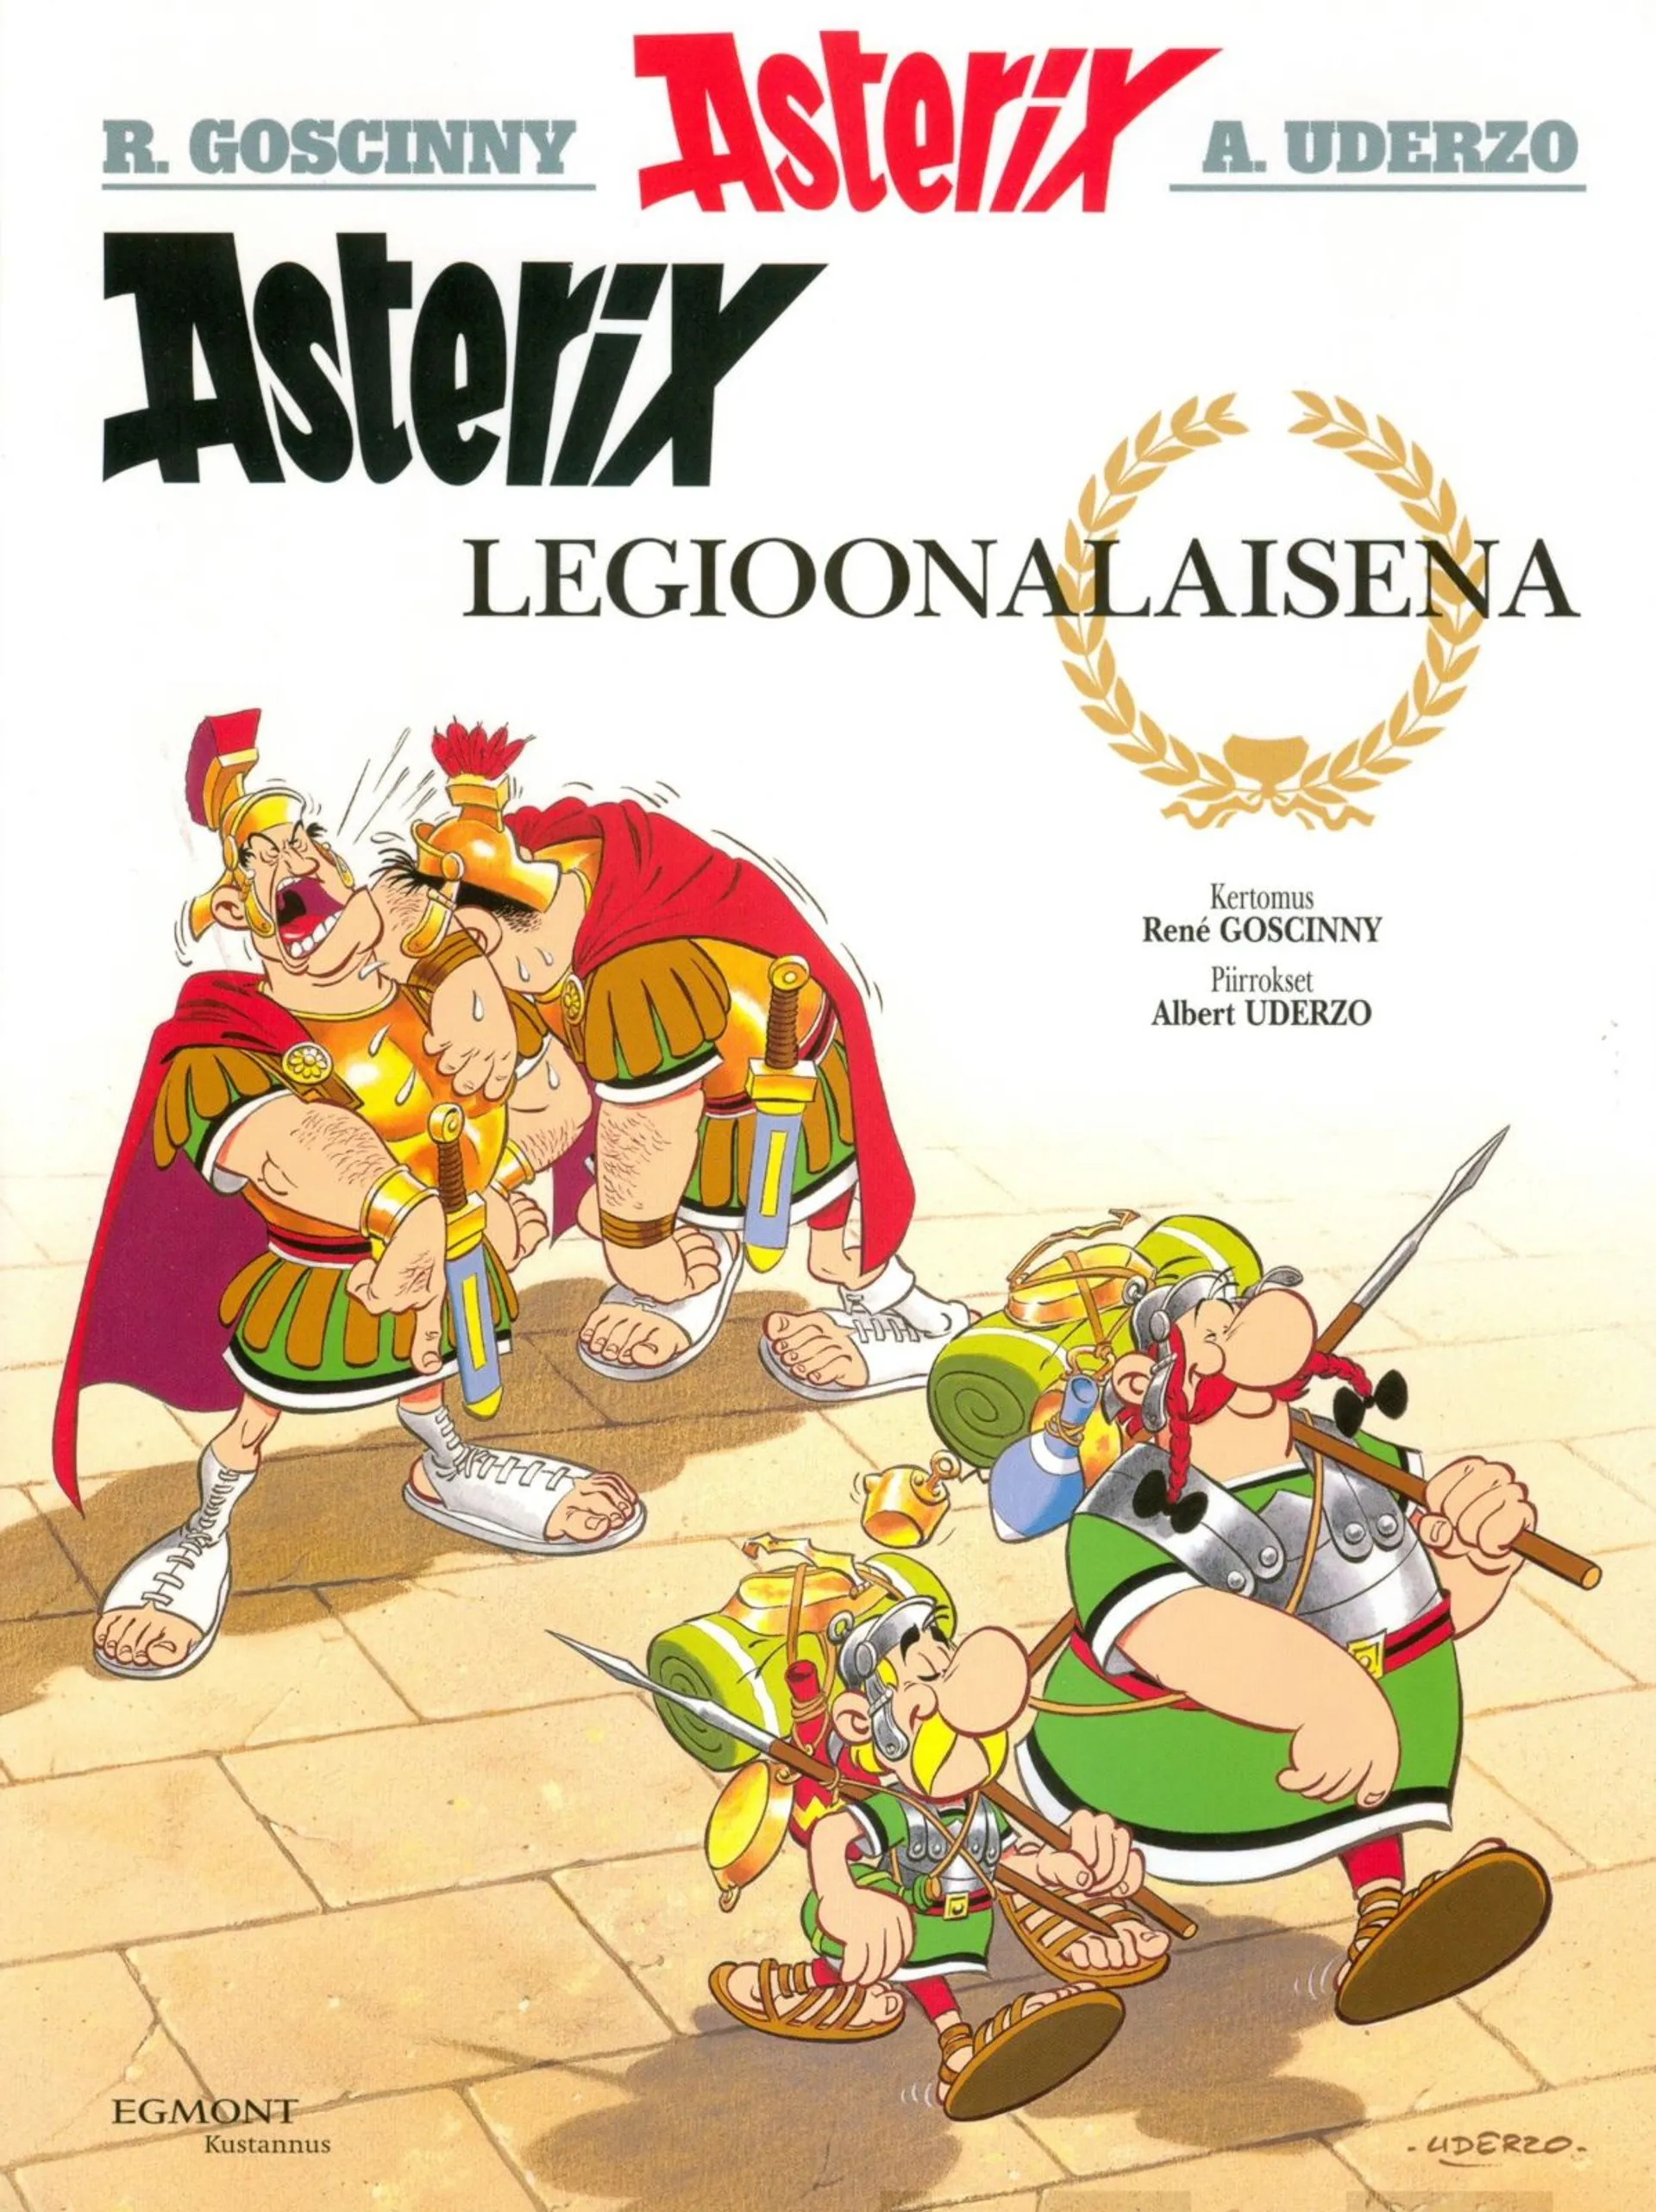 Goscinny, Asterix 10: Asterix legioonalaisena